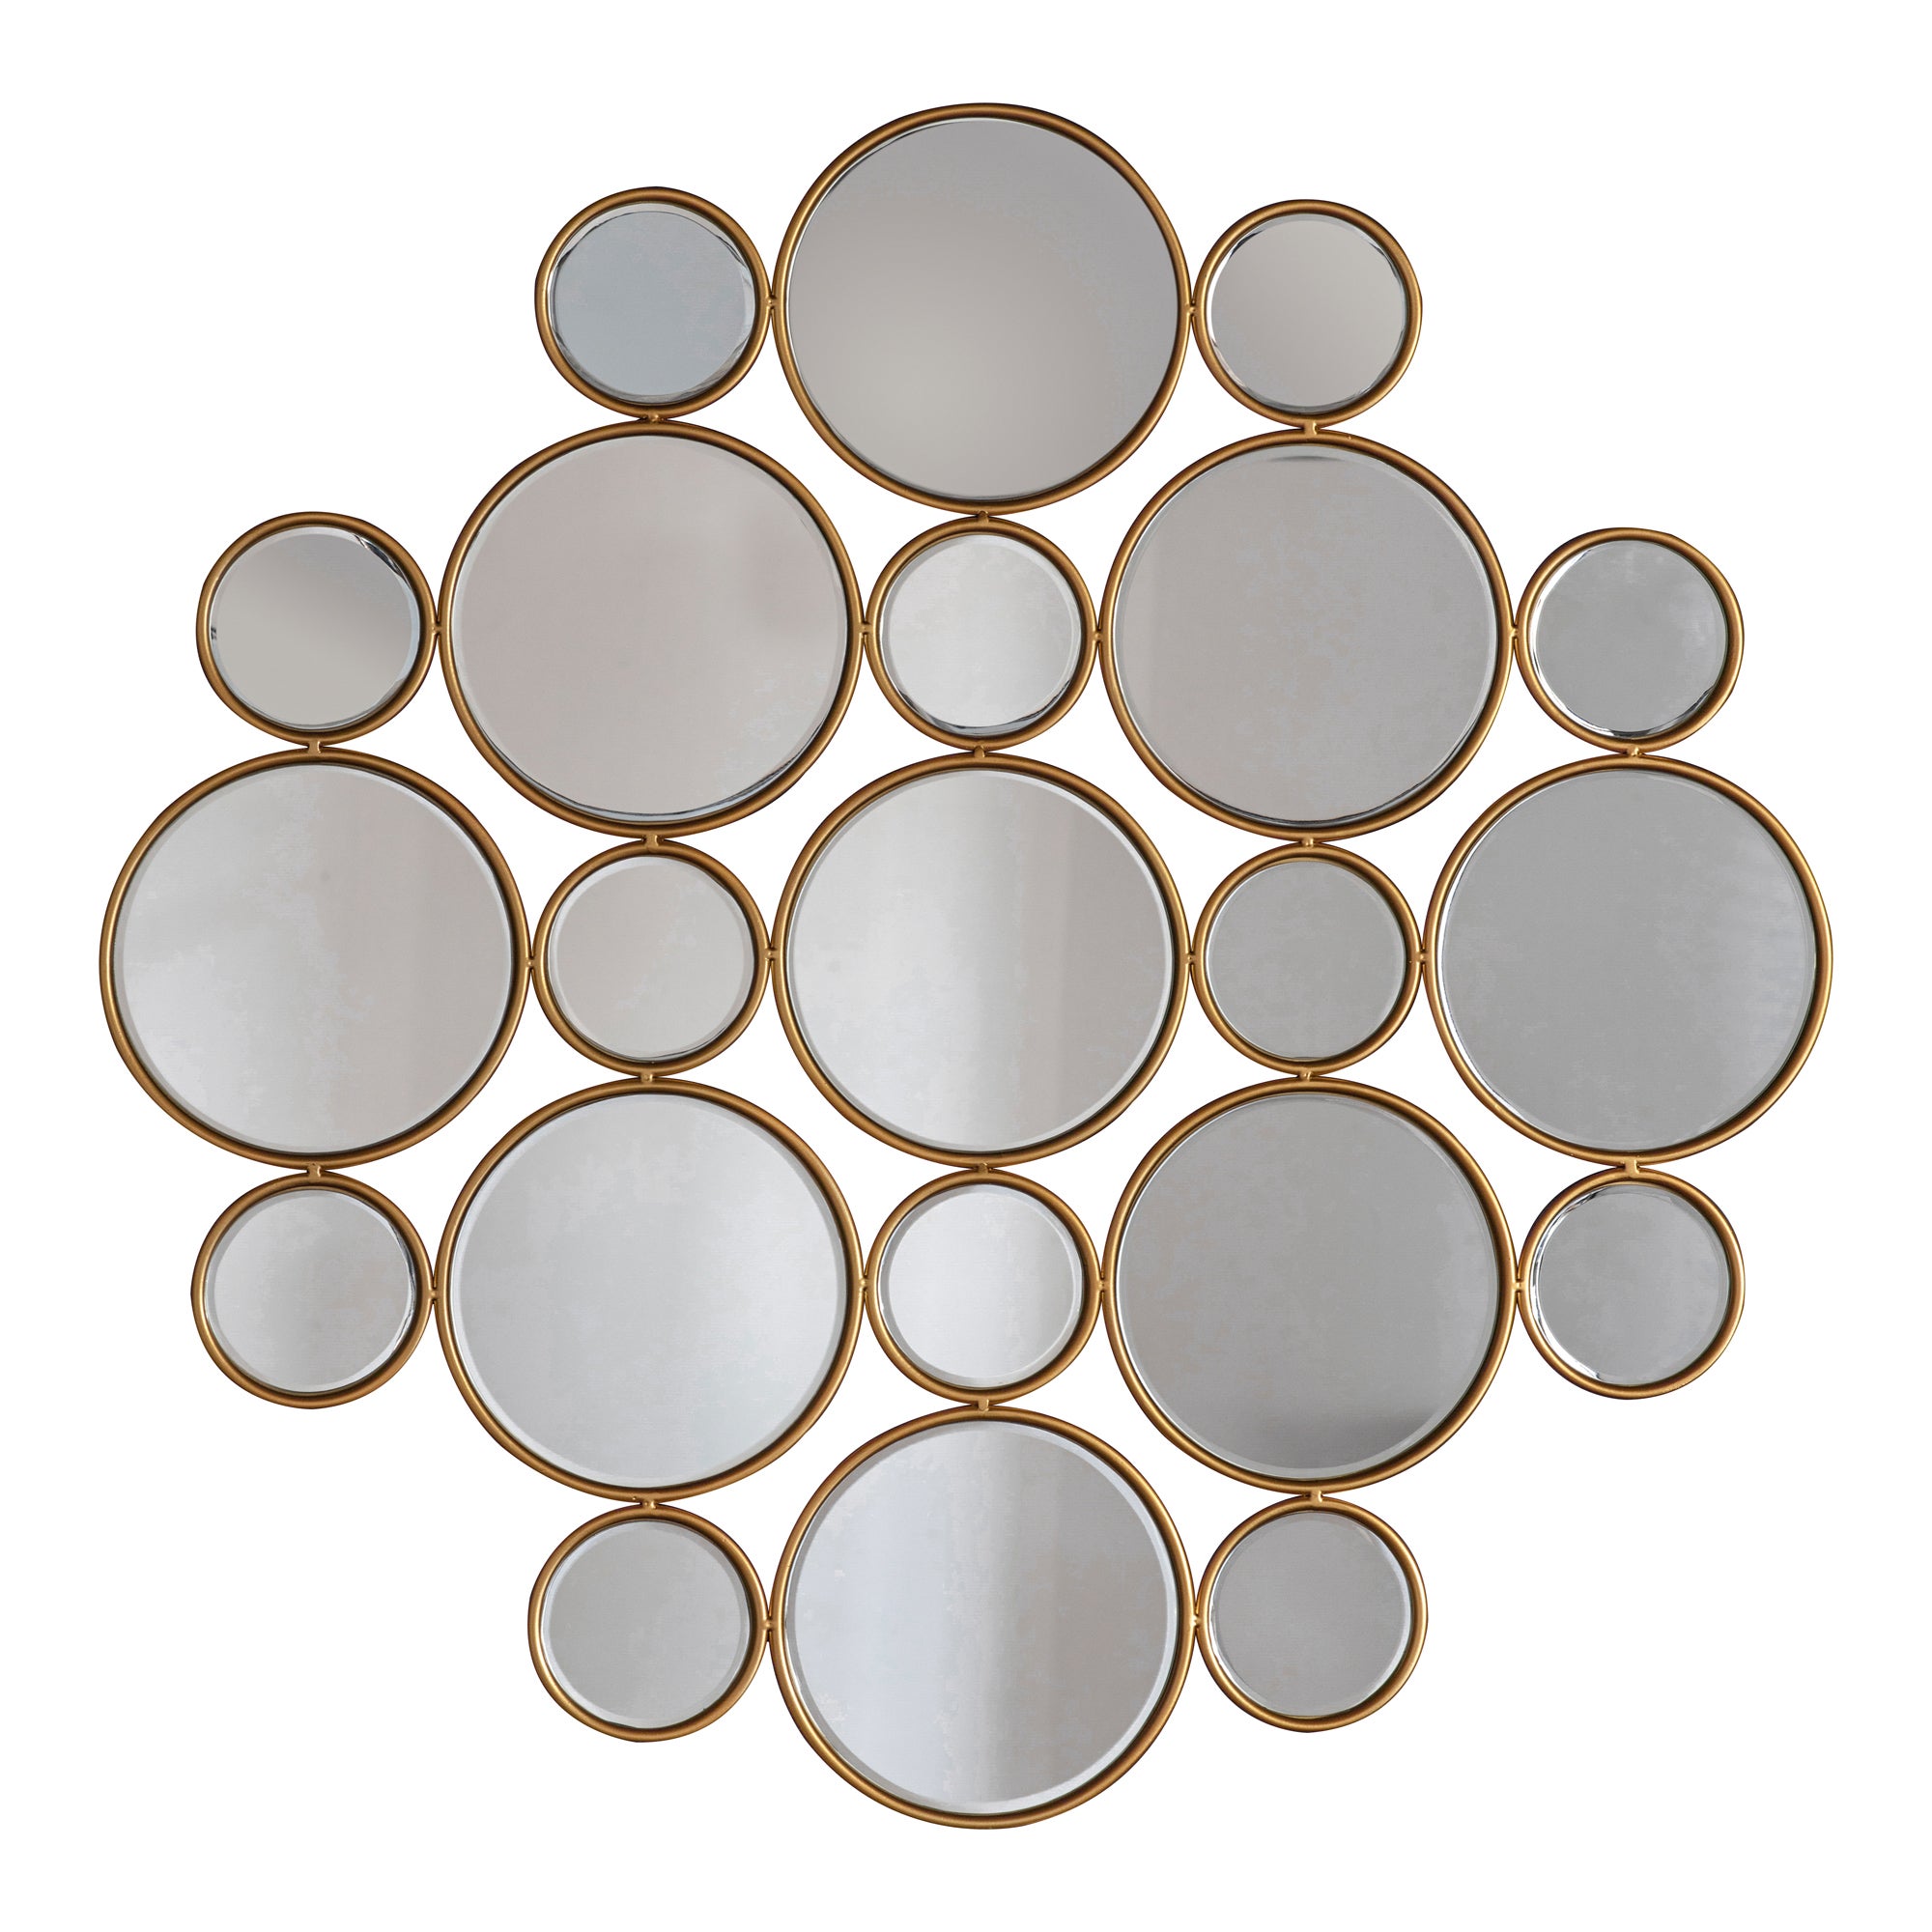 Guilford Circles Round Wall Mirror | Dunelm